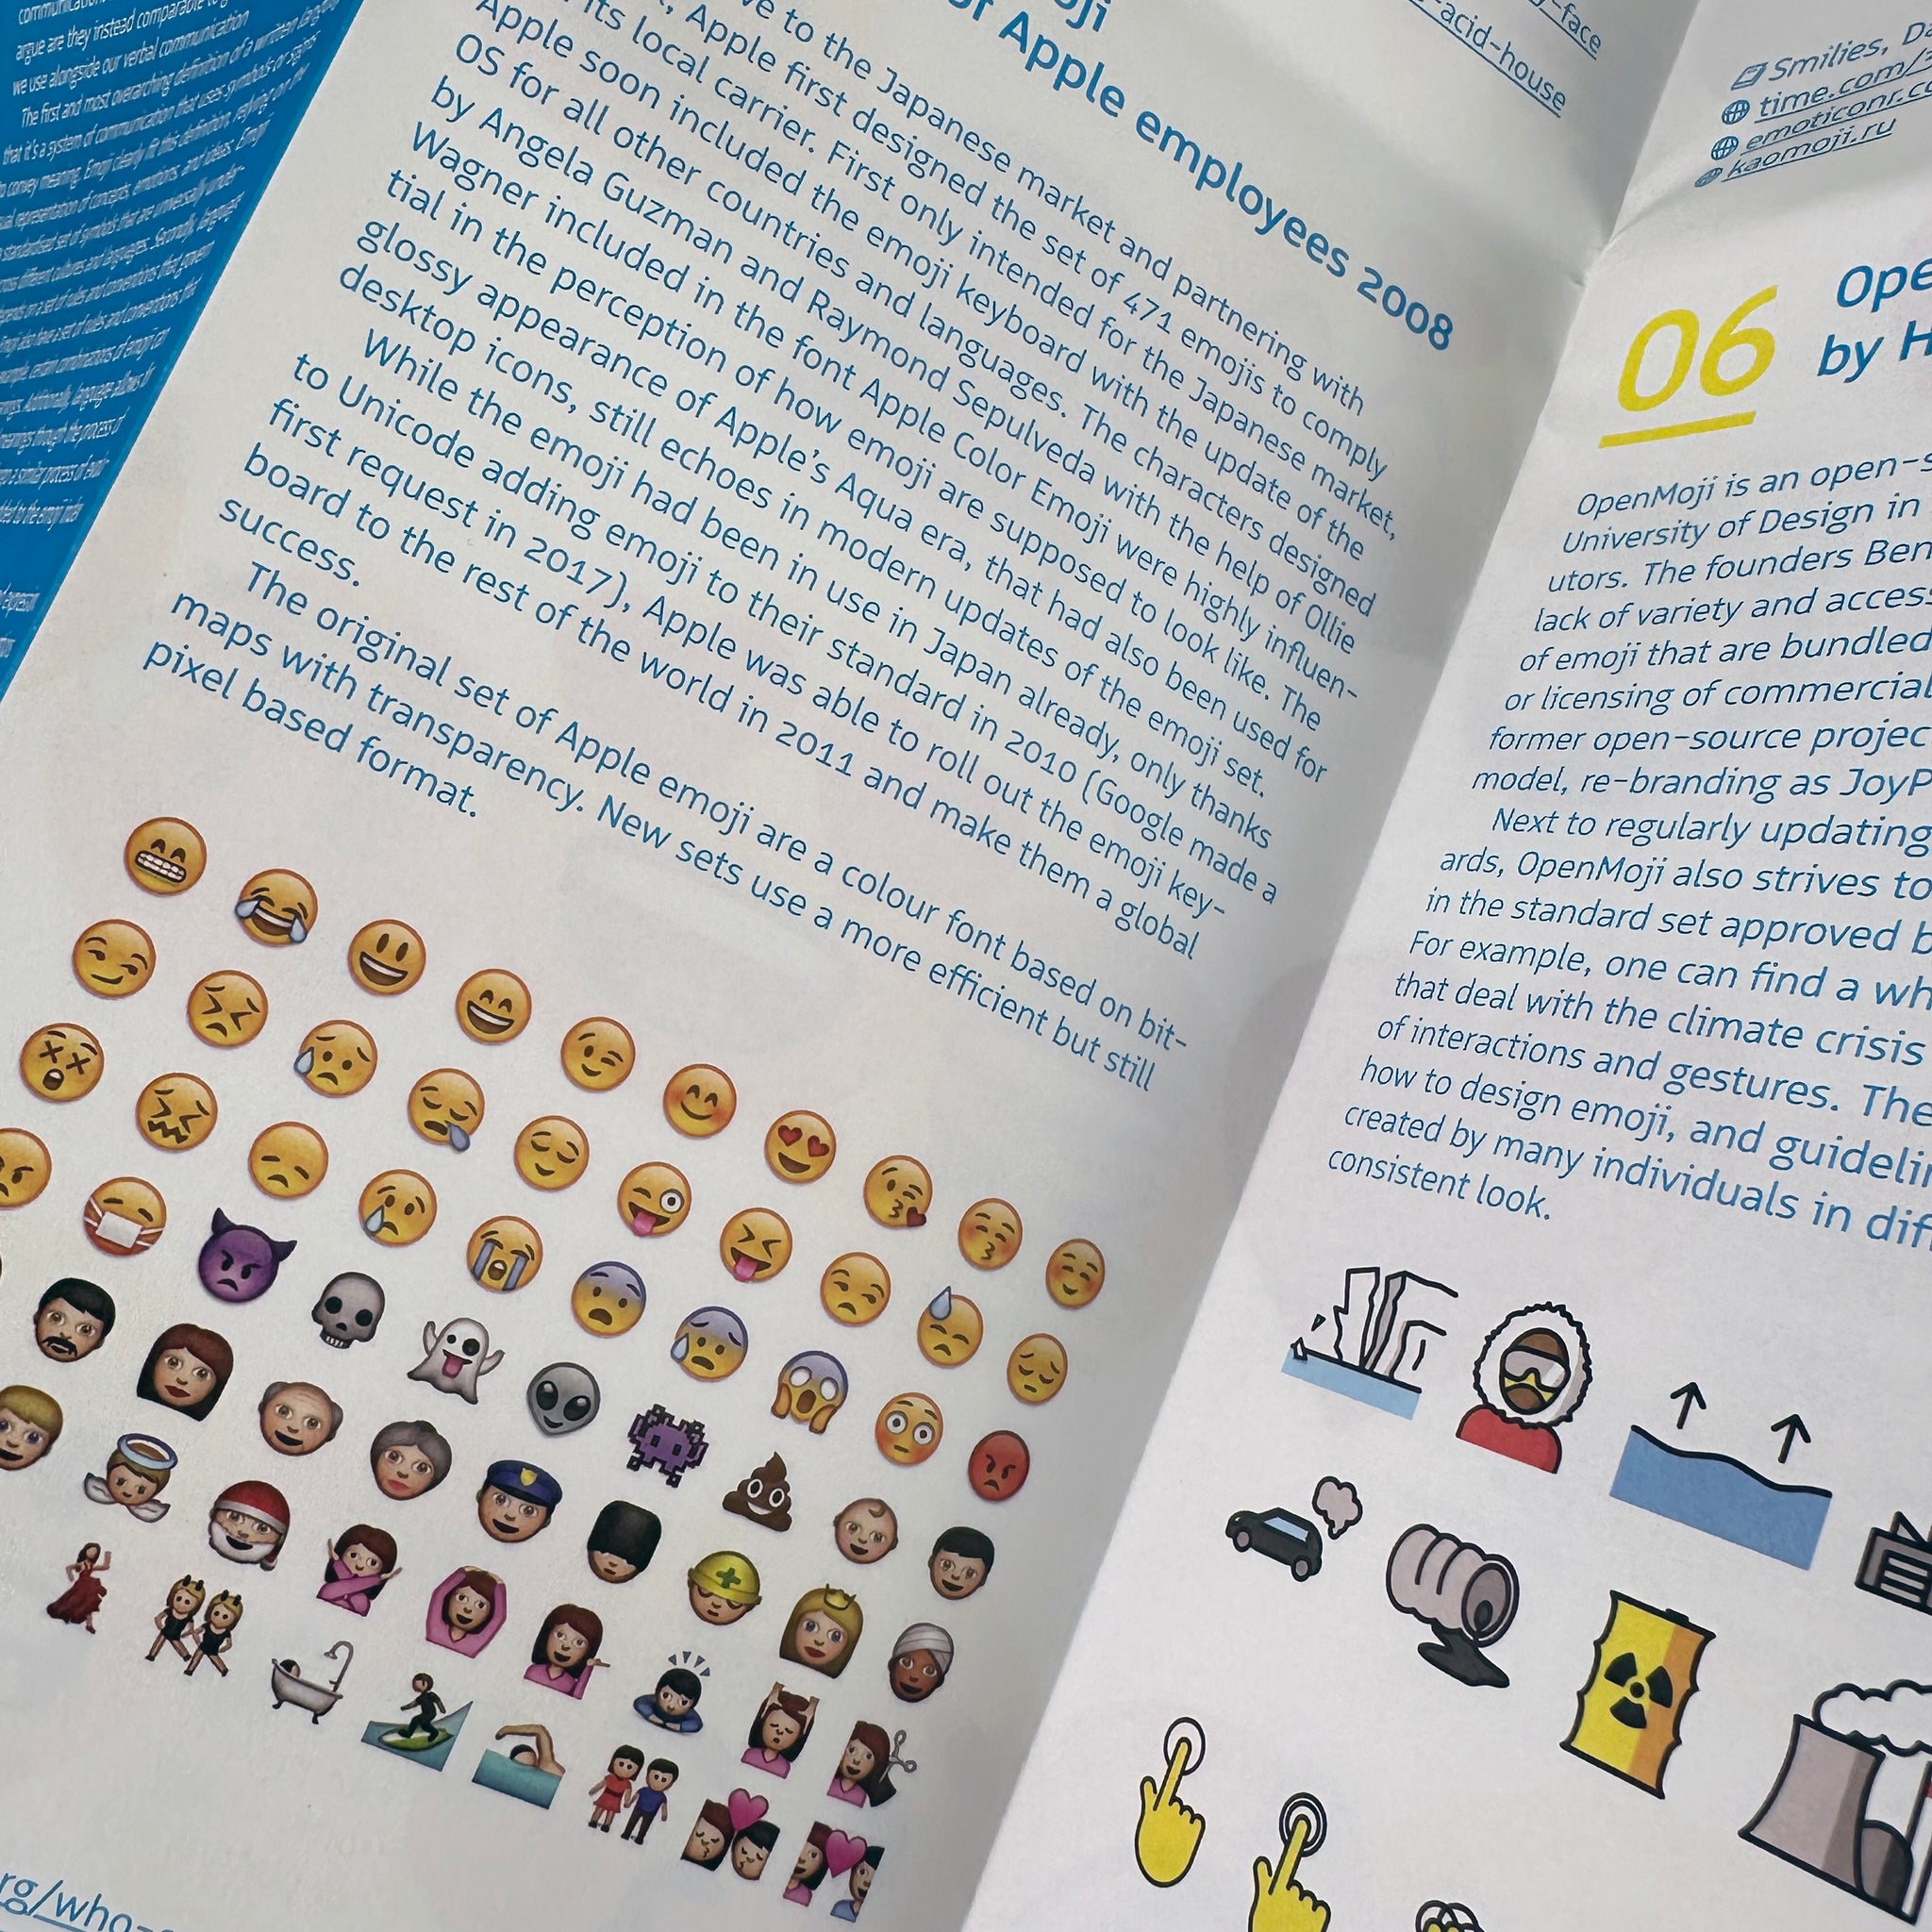 The Evolution of Emoji into a Language